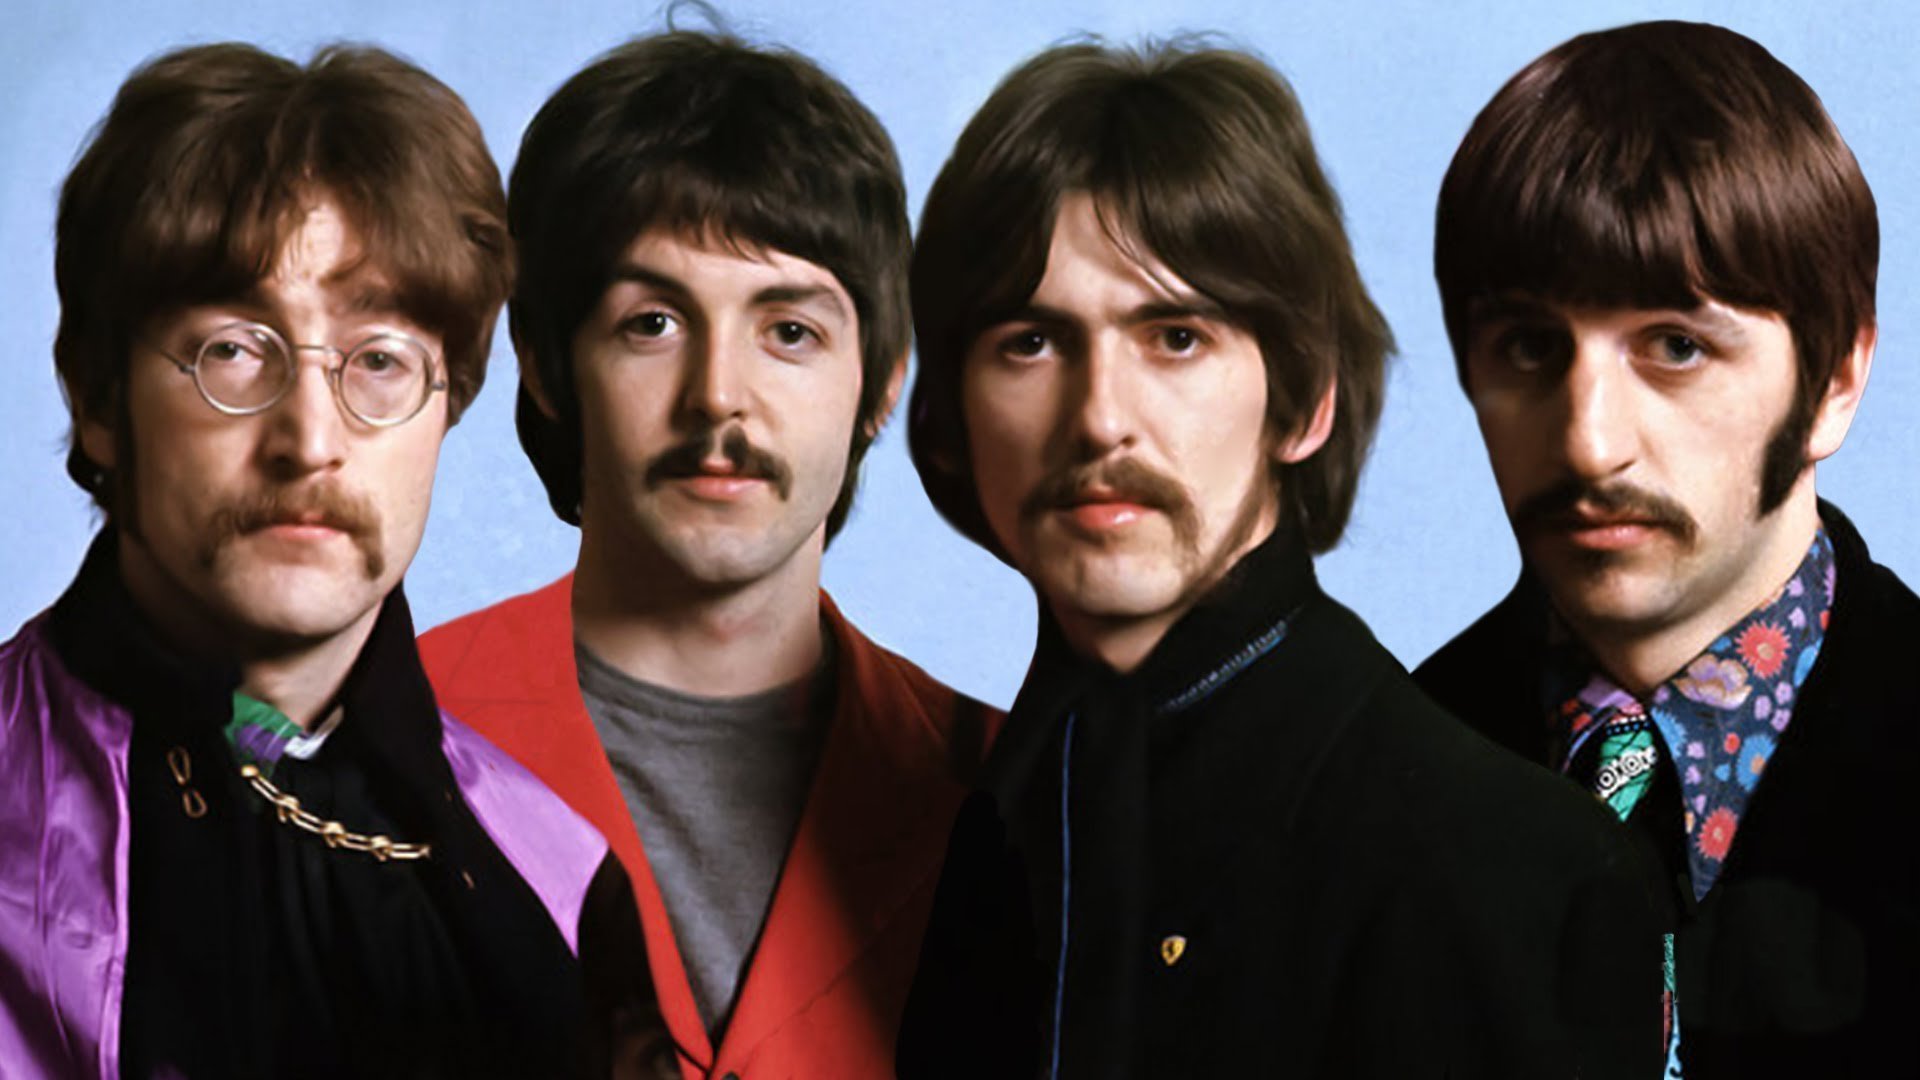 Free download The Beatles wallpaper ID:271301 full hd 1920x1080 for desktop